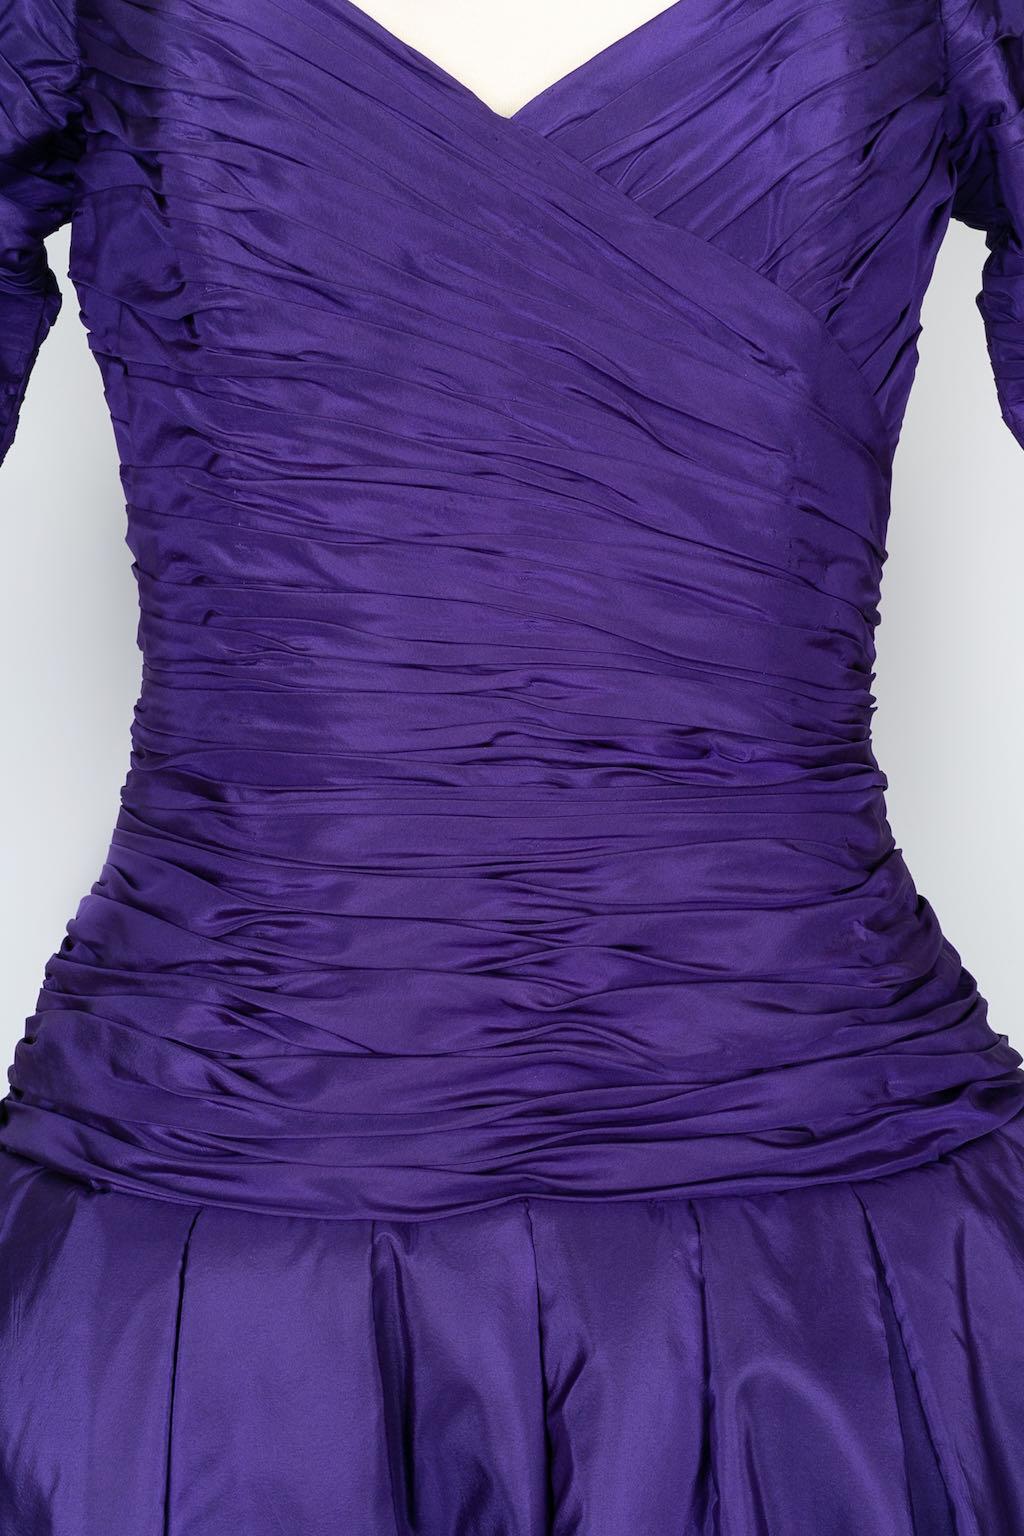 Azzaro Evening Taffeta Cape Embroidered Dress, Size 40FR 4